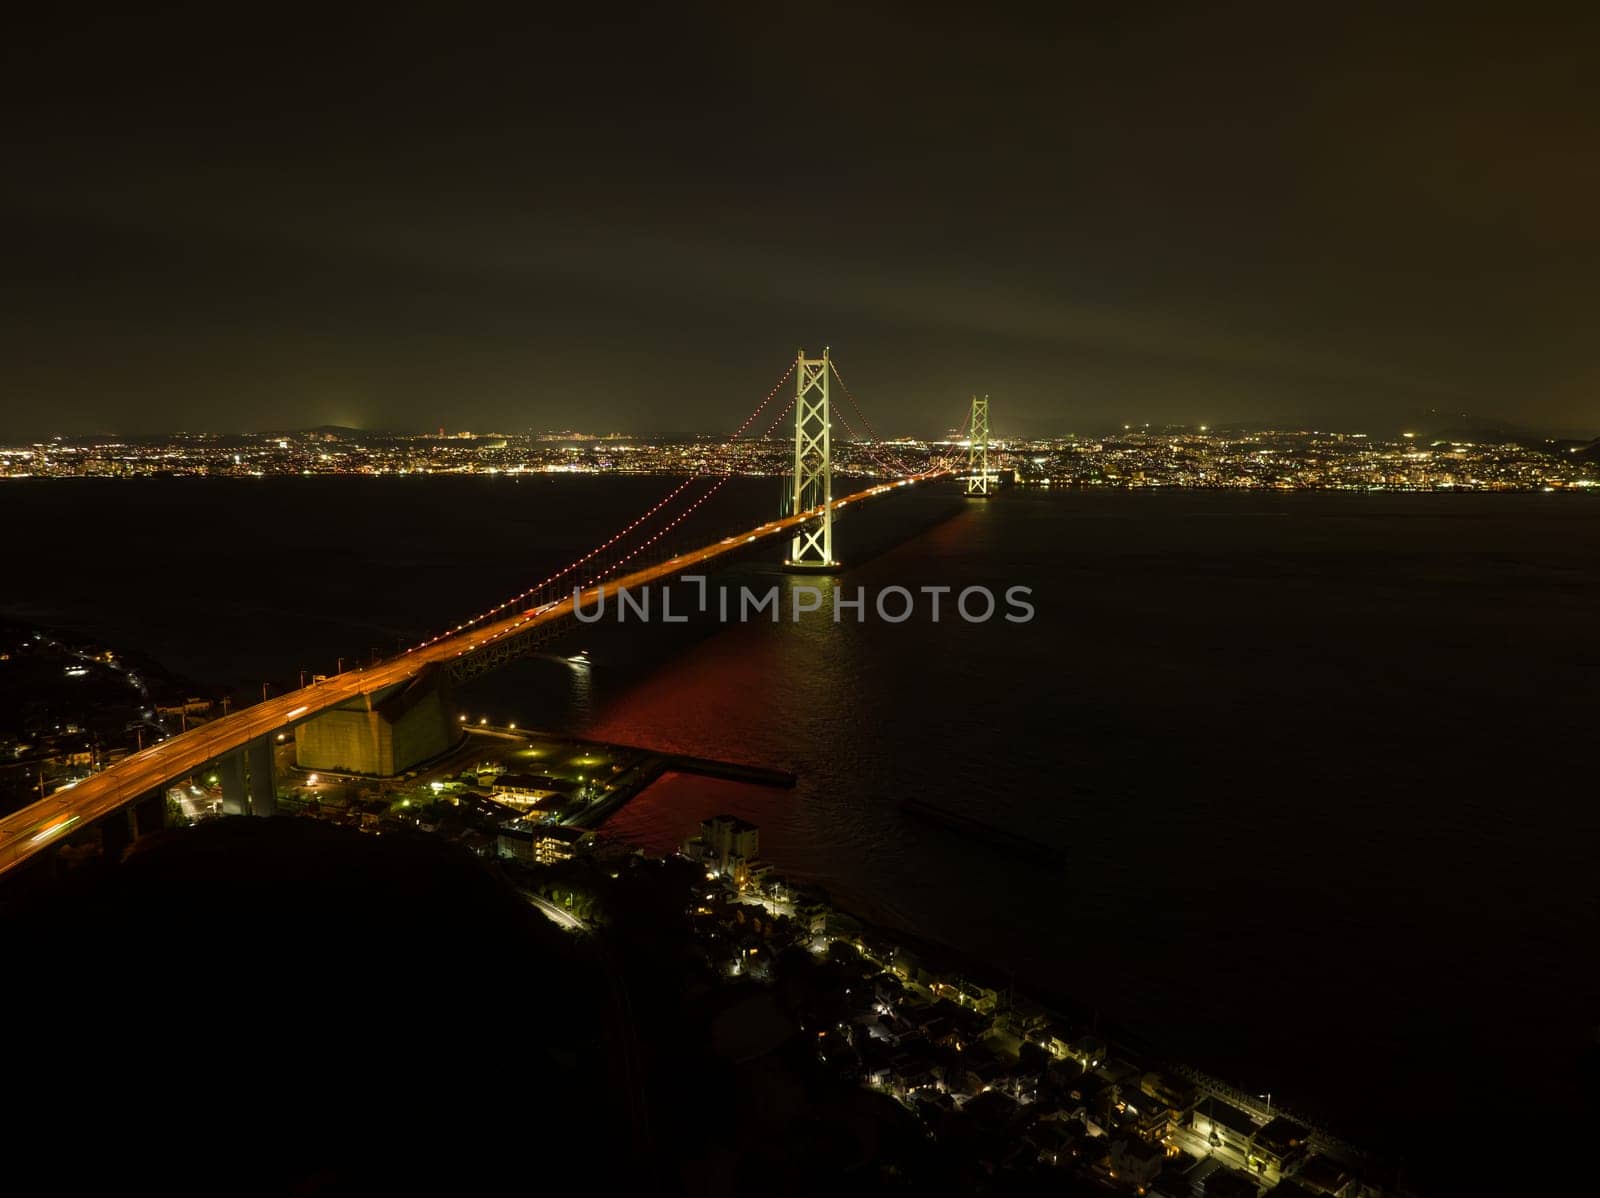 Akashi Kaikyo suspension bridge over dark water between city lights at night. High quality photo